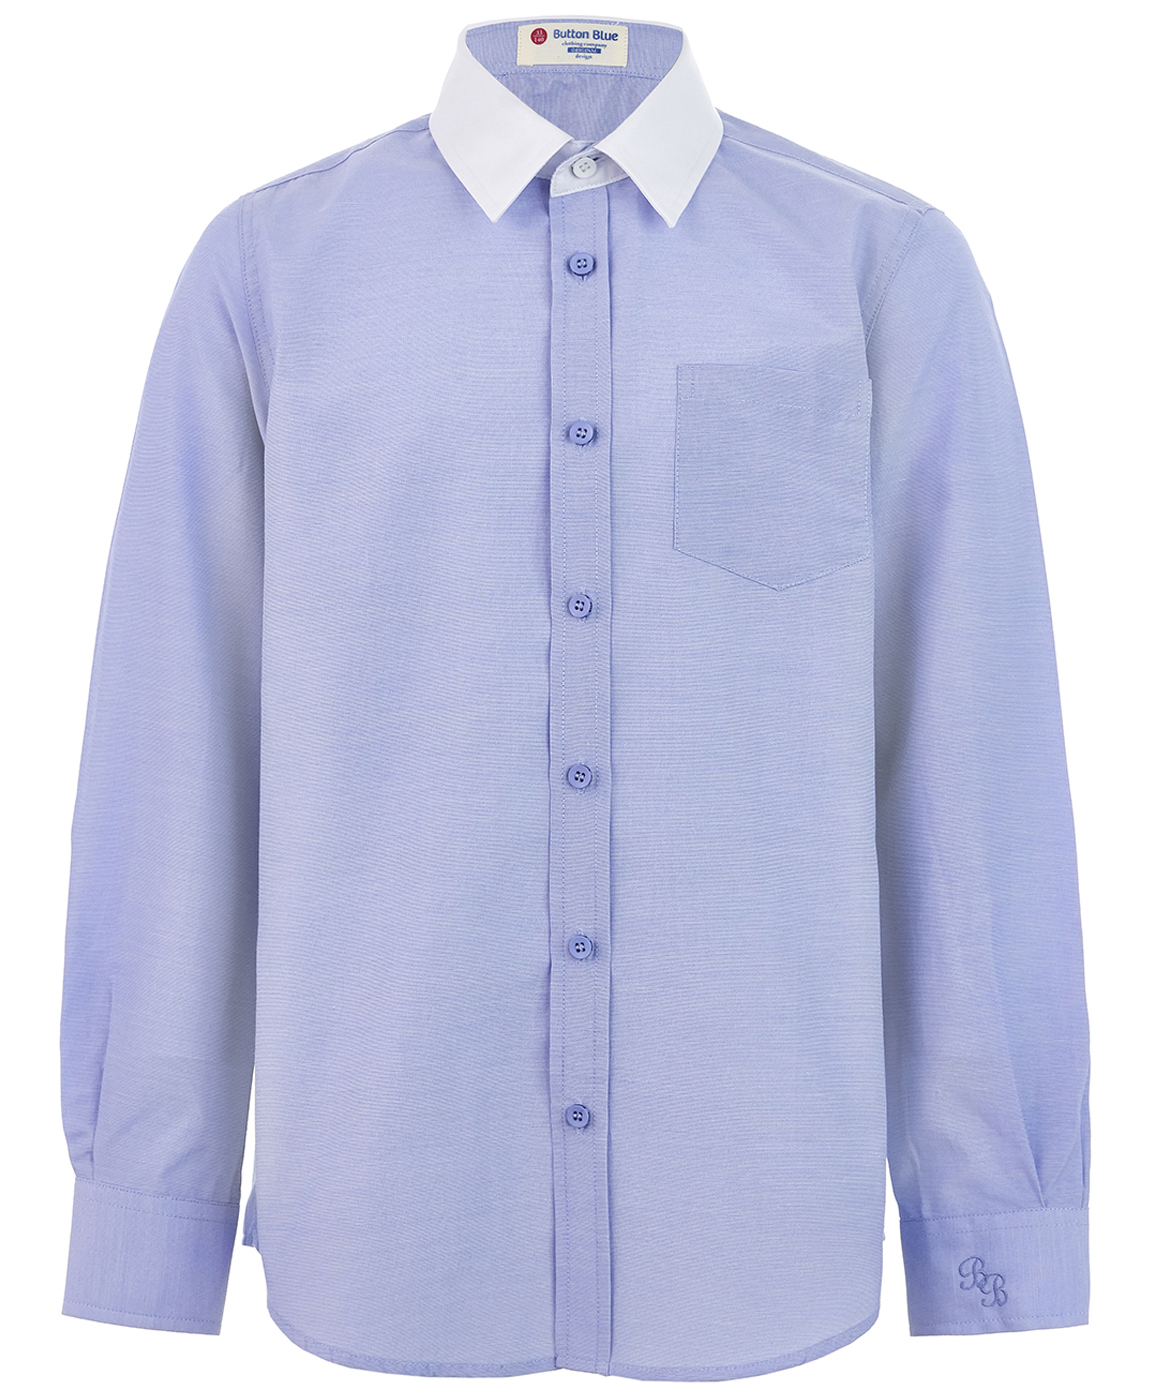 Голубая рубашка с белым воротничком Button Blue